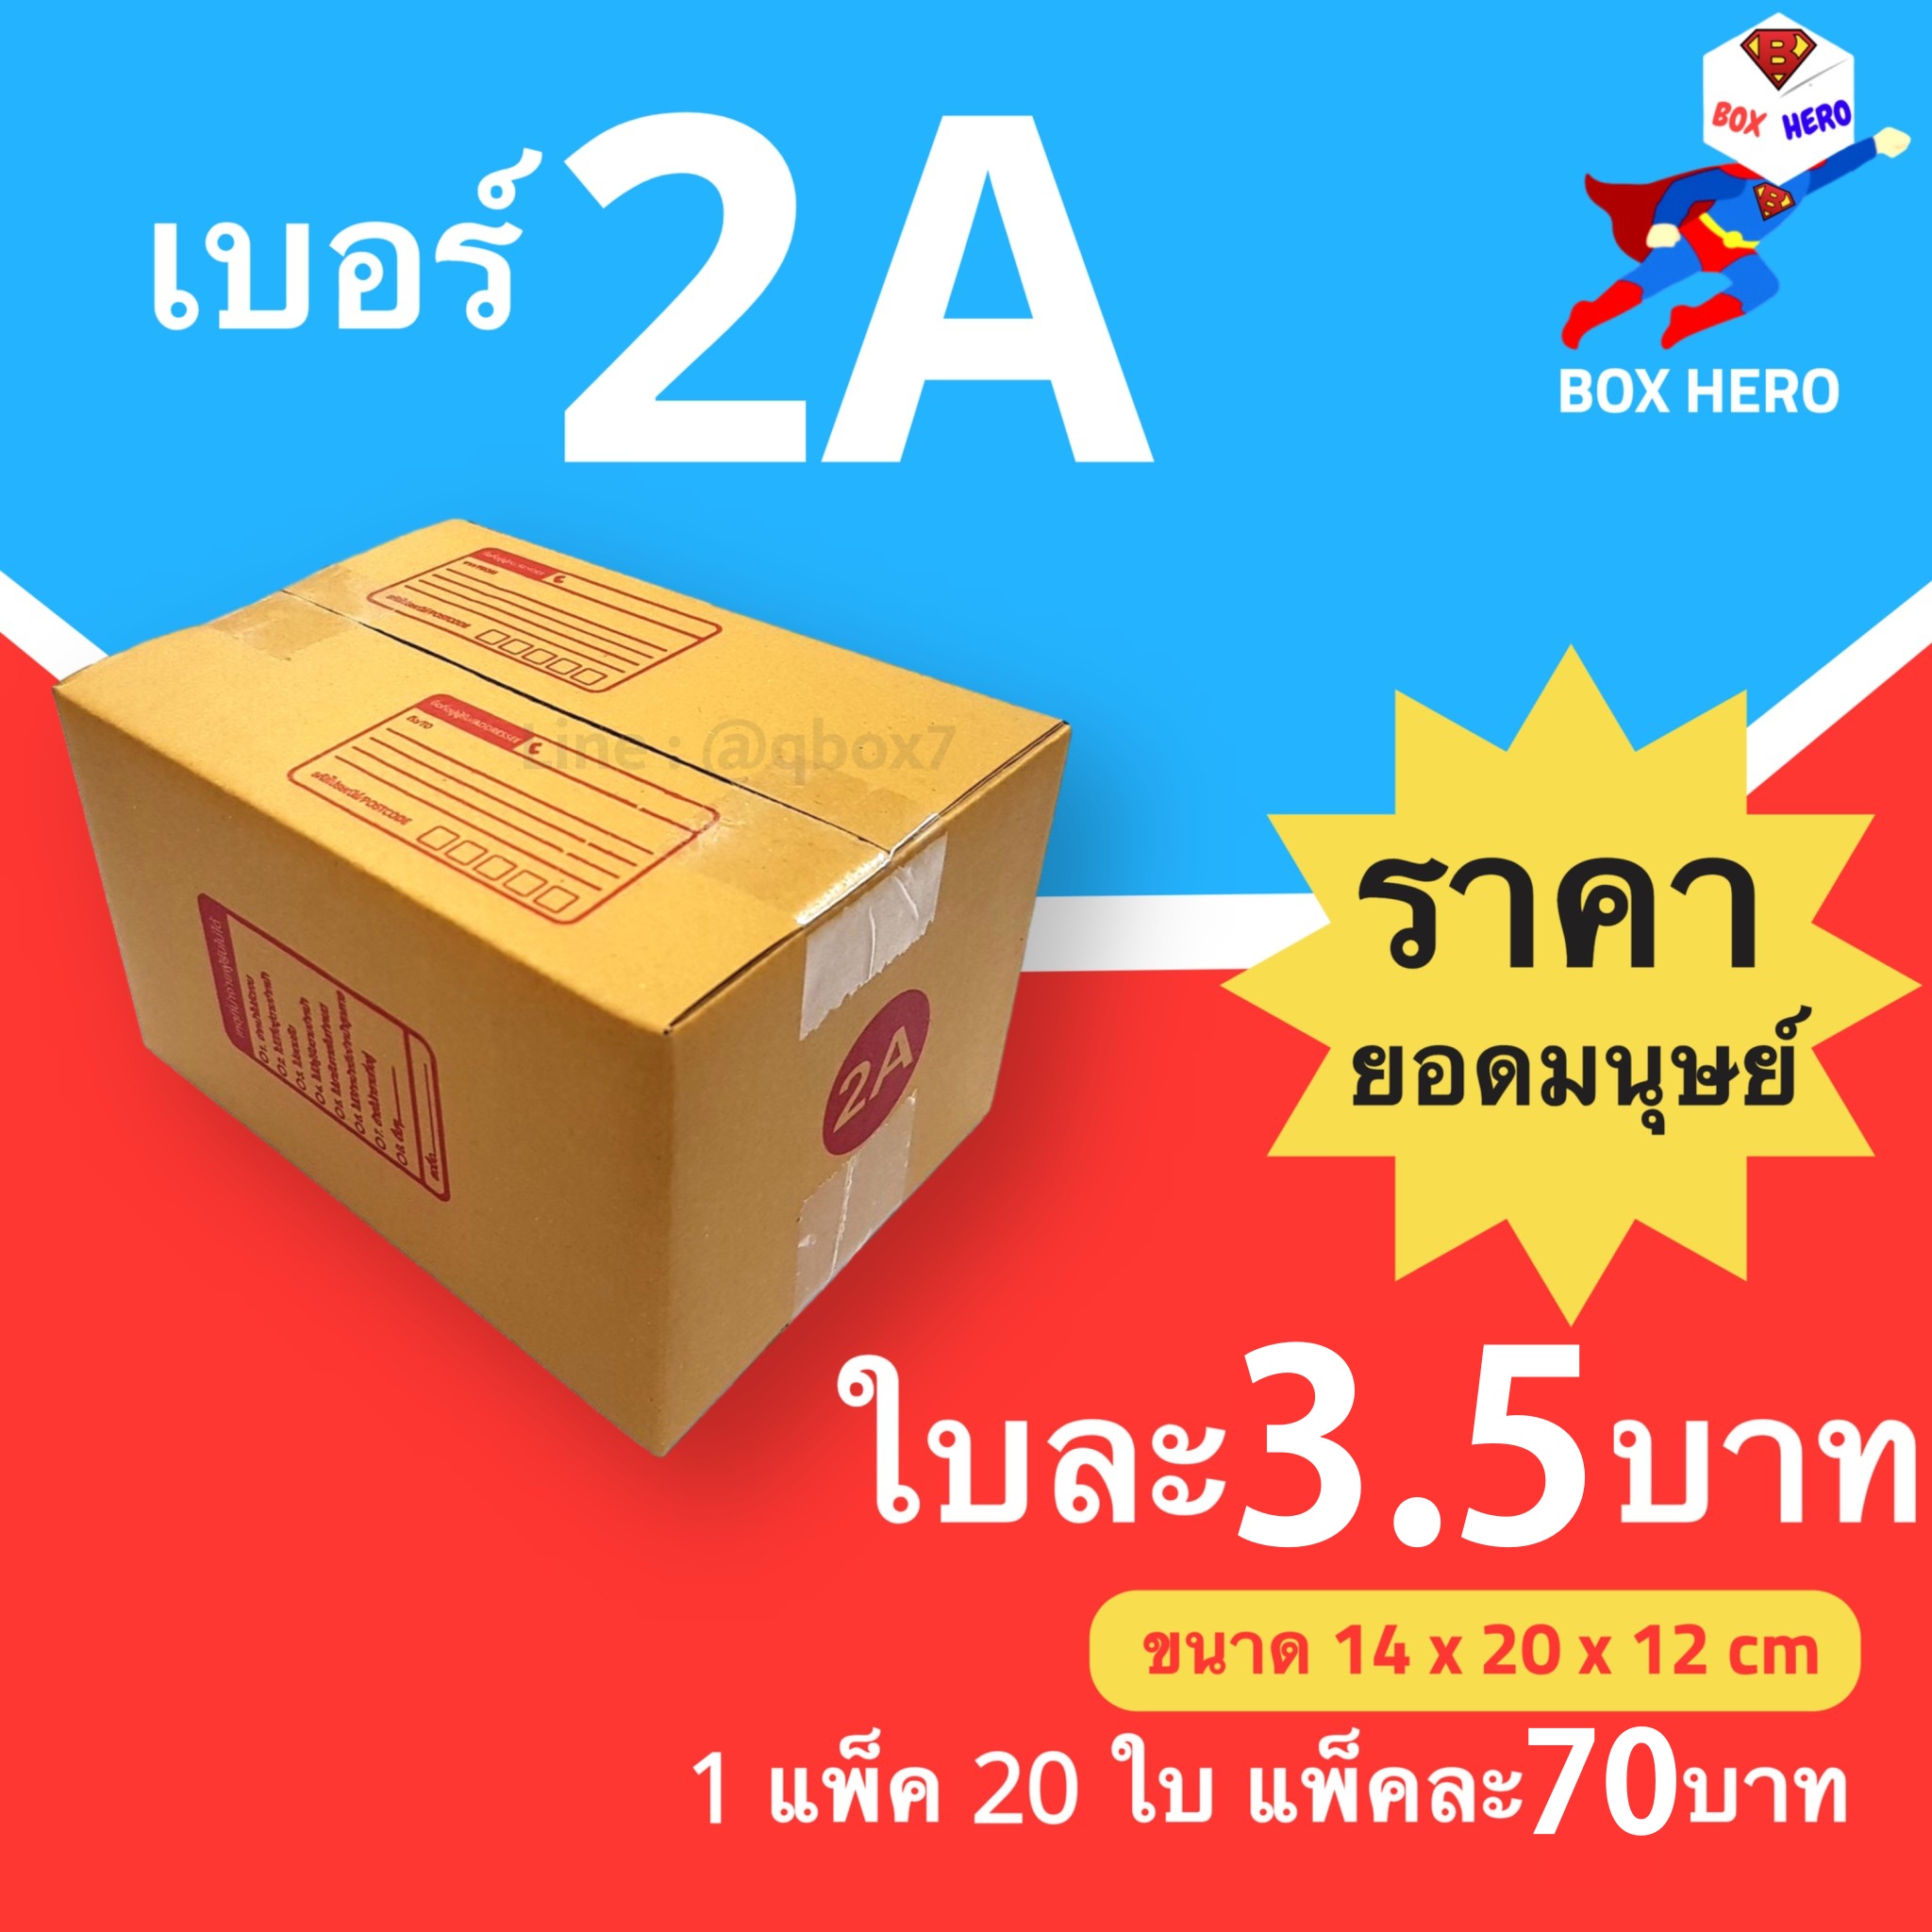 BoxHero กล่องไปรษณีย์เบอร์ 2A มีพิมพ์จ่าหน้า กล่องพัสดุ (20 ใบ 70 บาท)